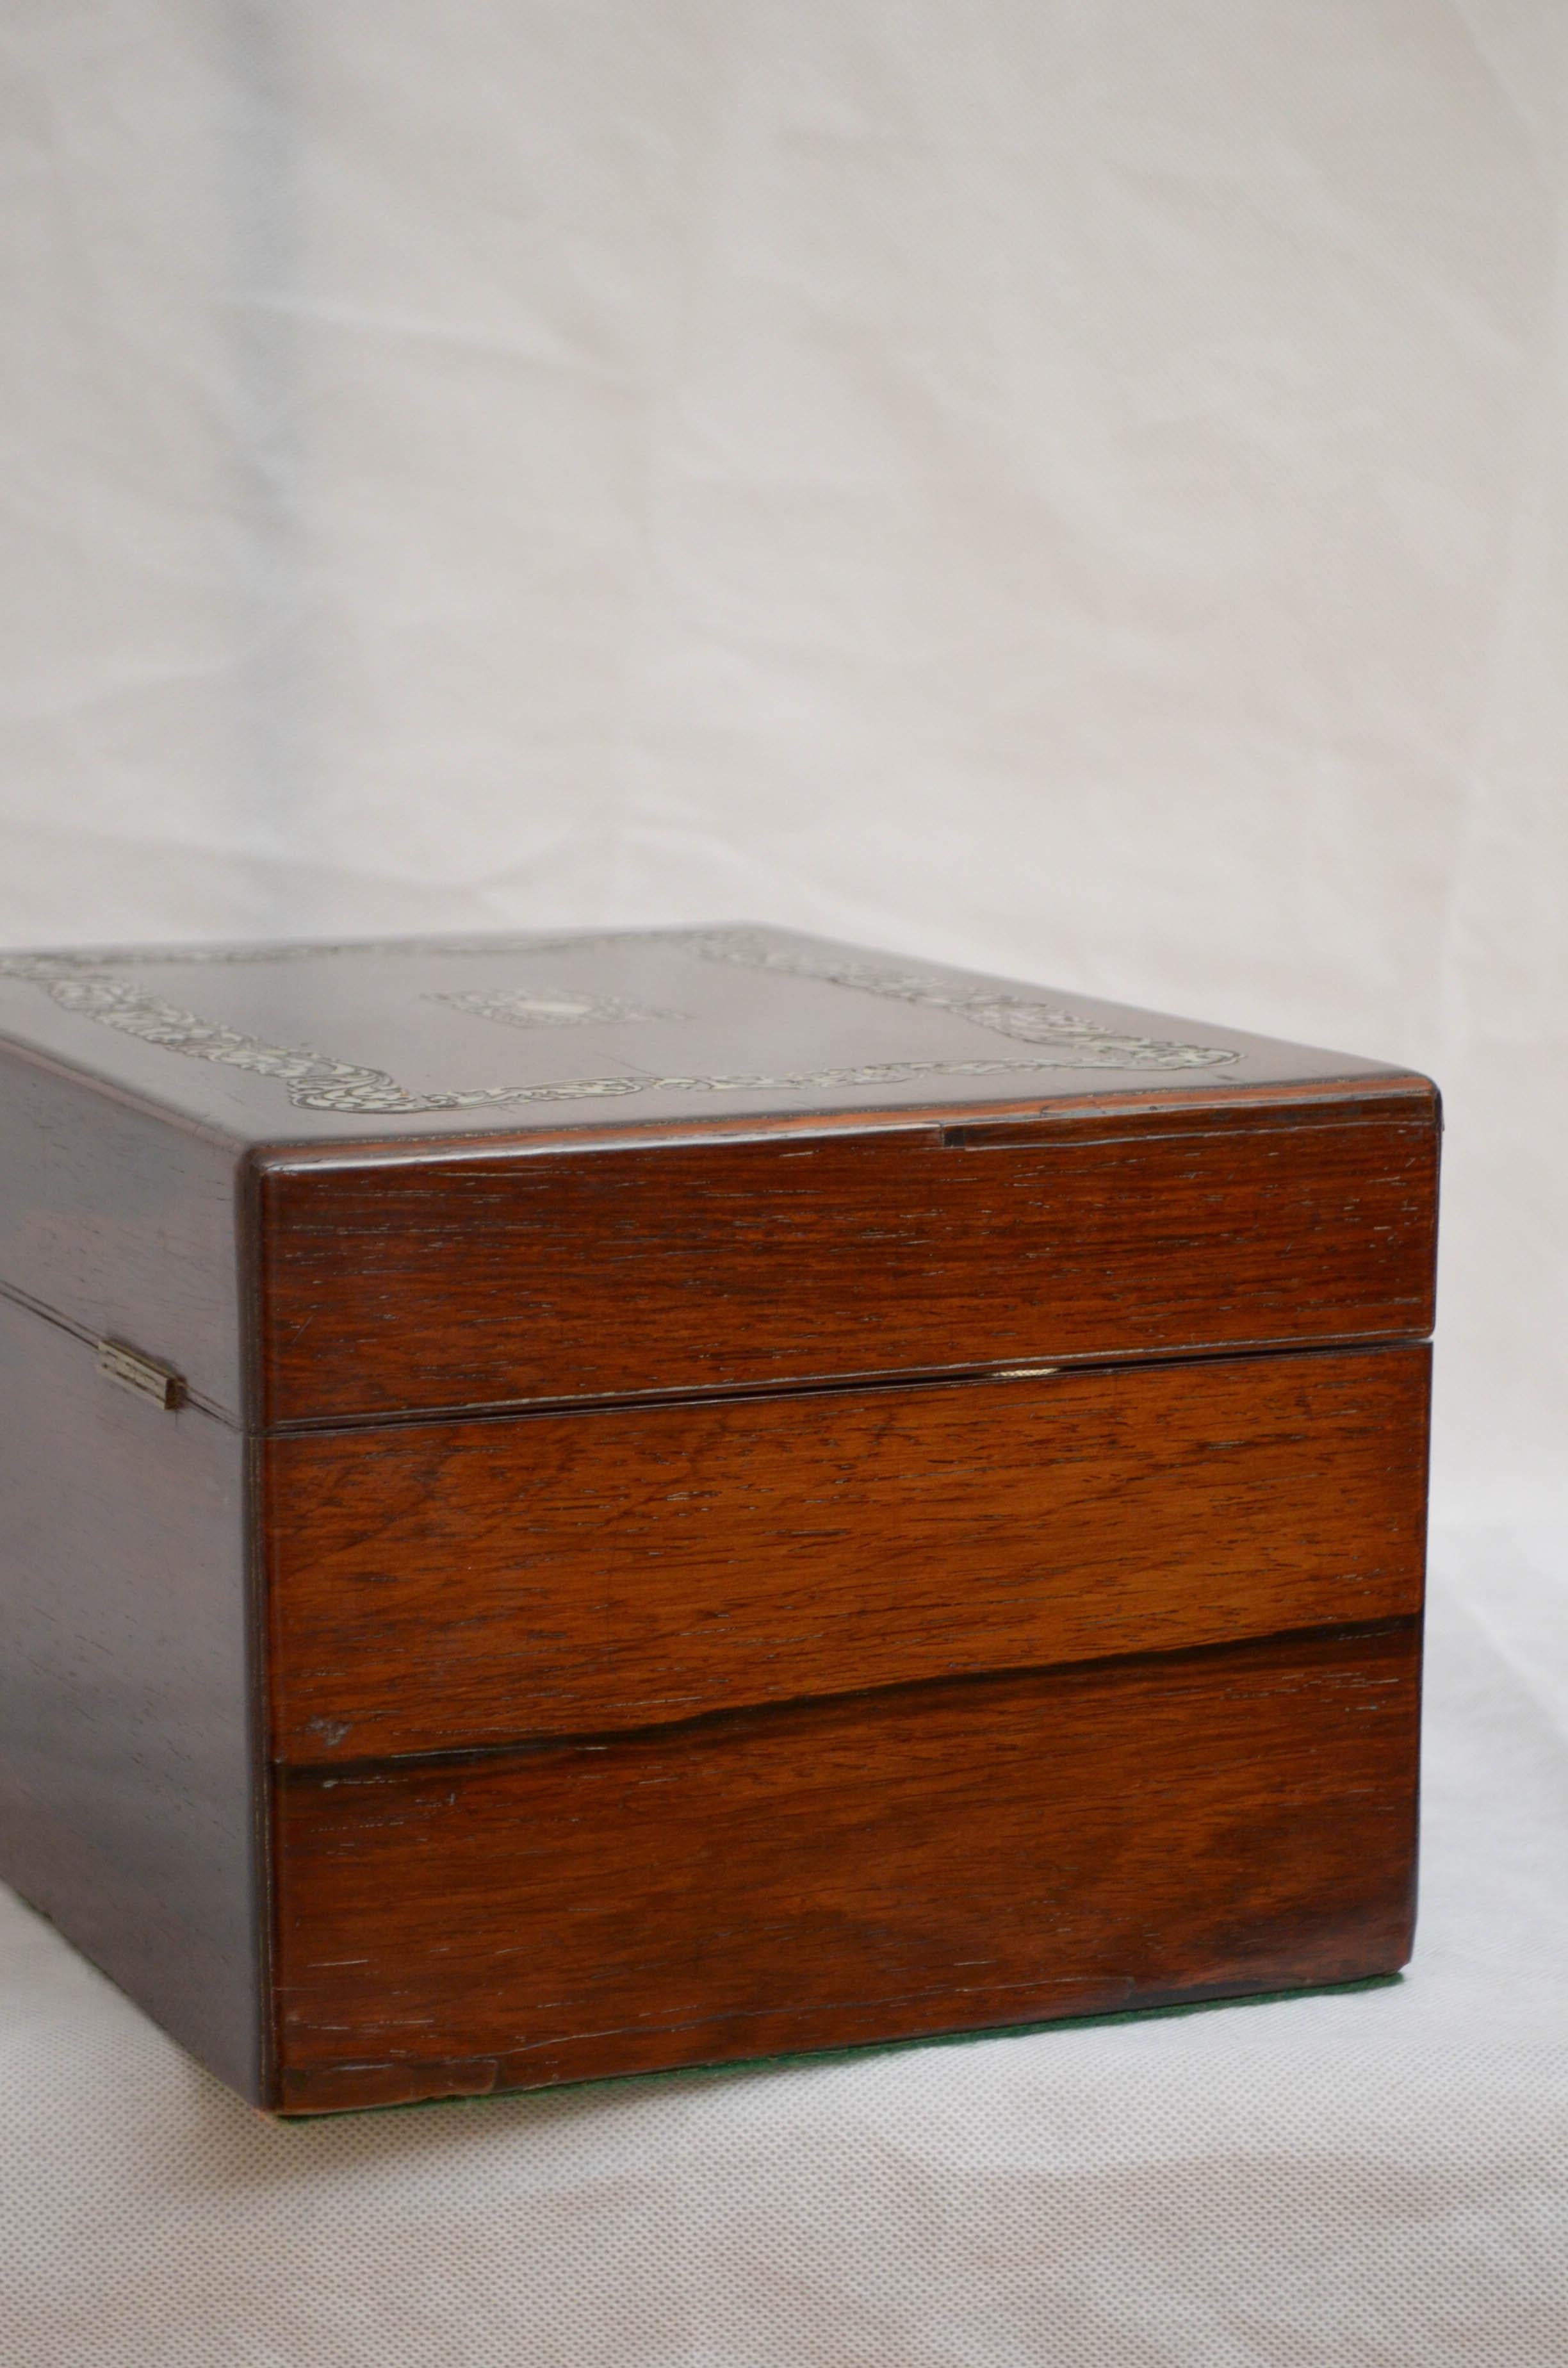 Superb Early Victorian Jewelry Box Vanity Box 7